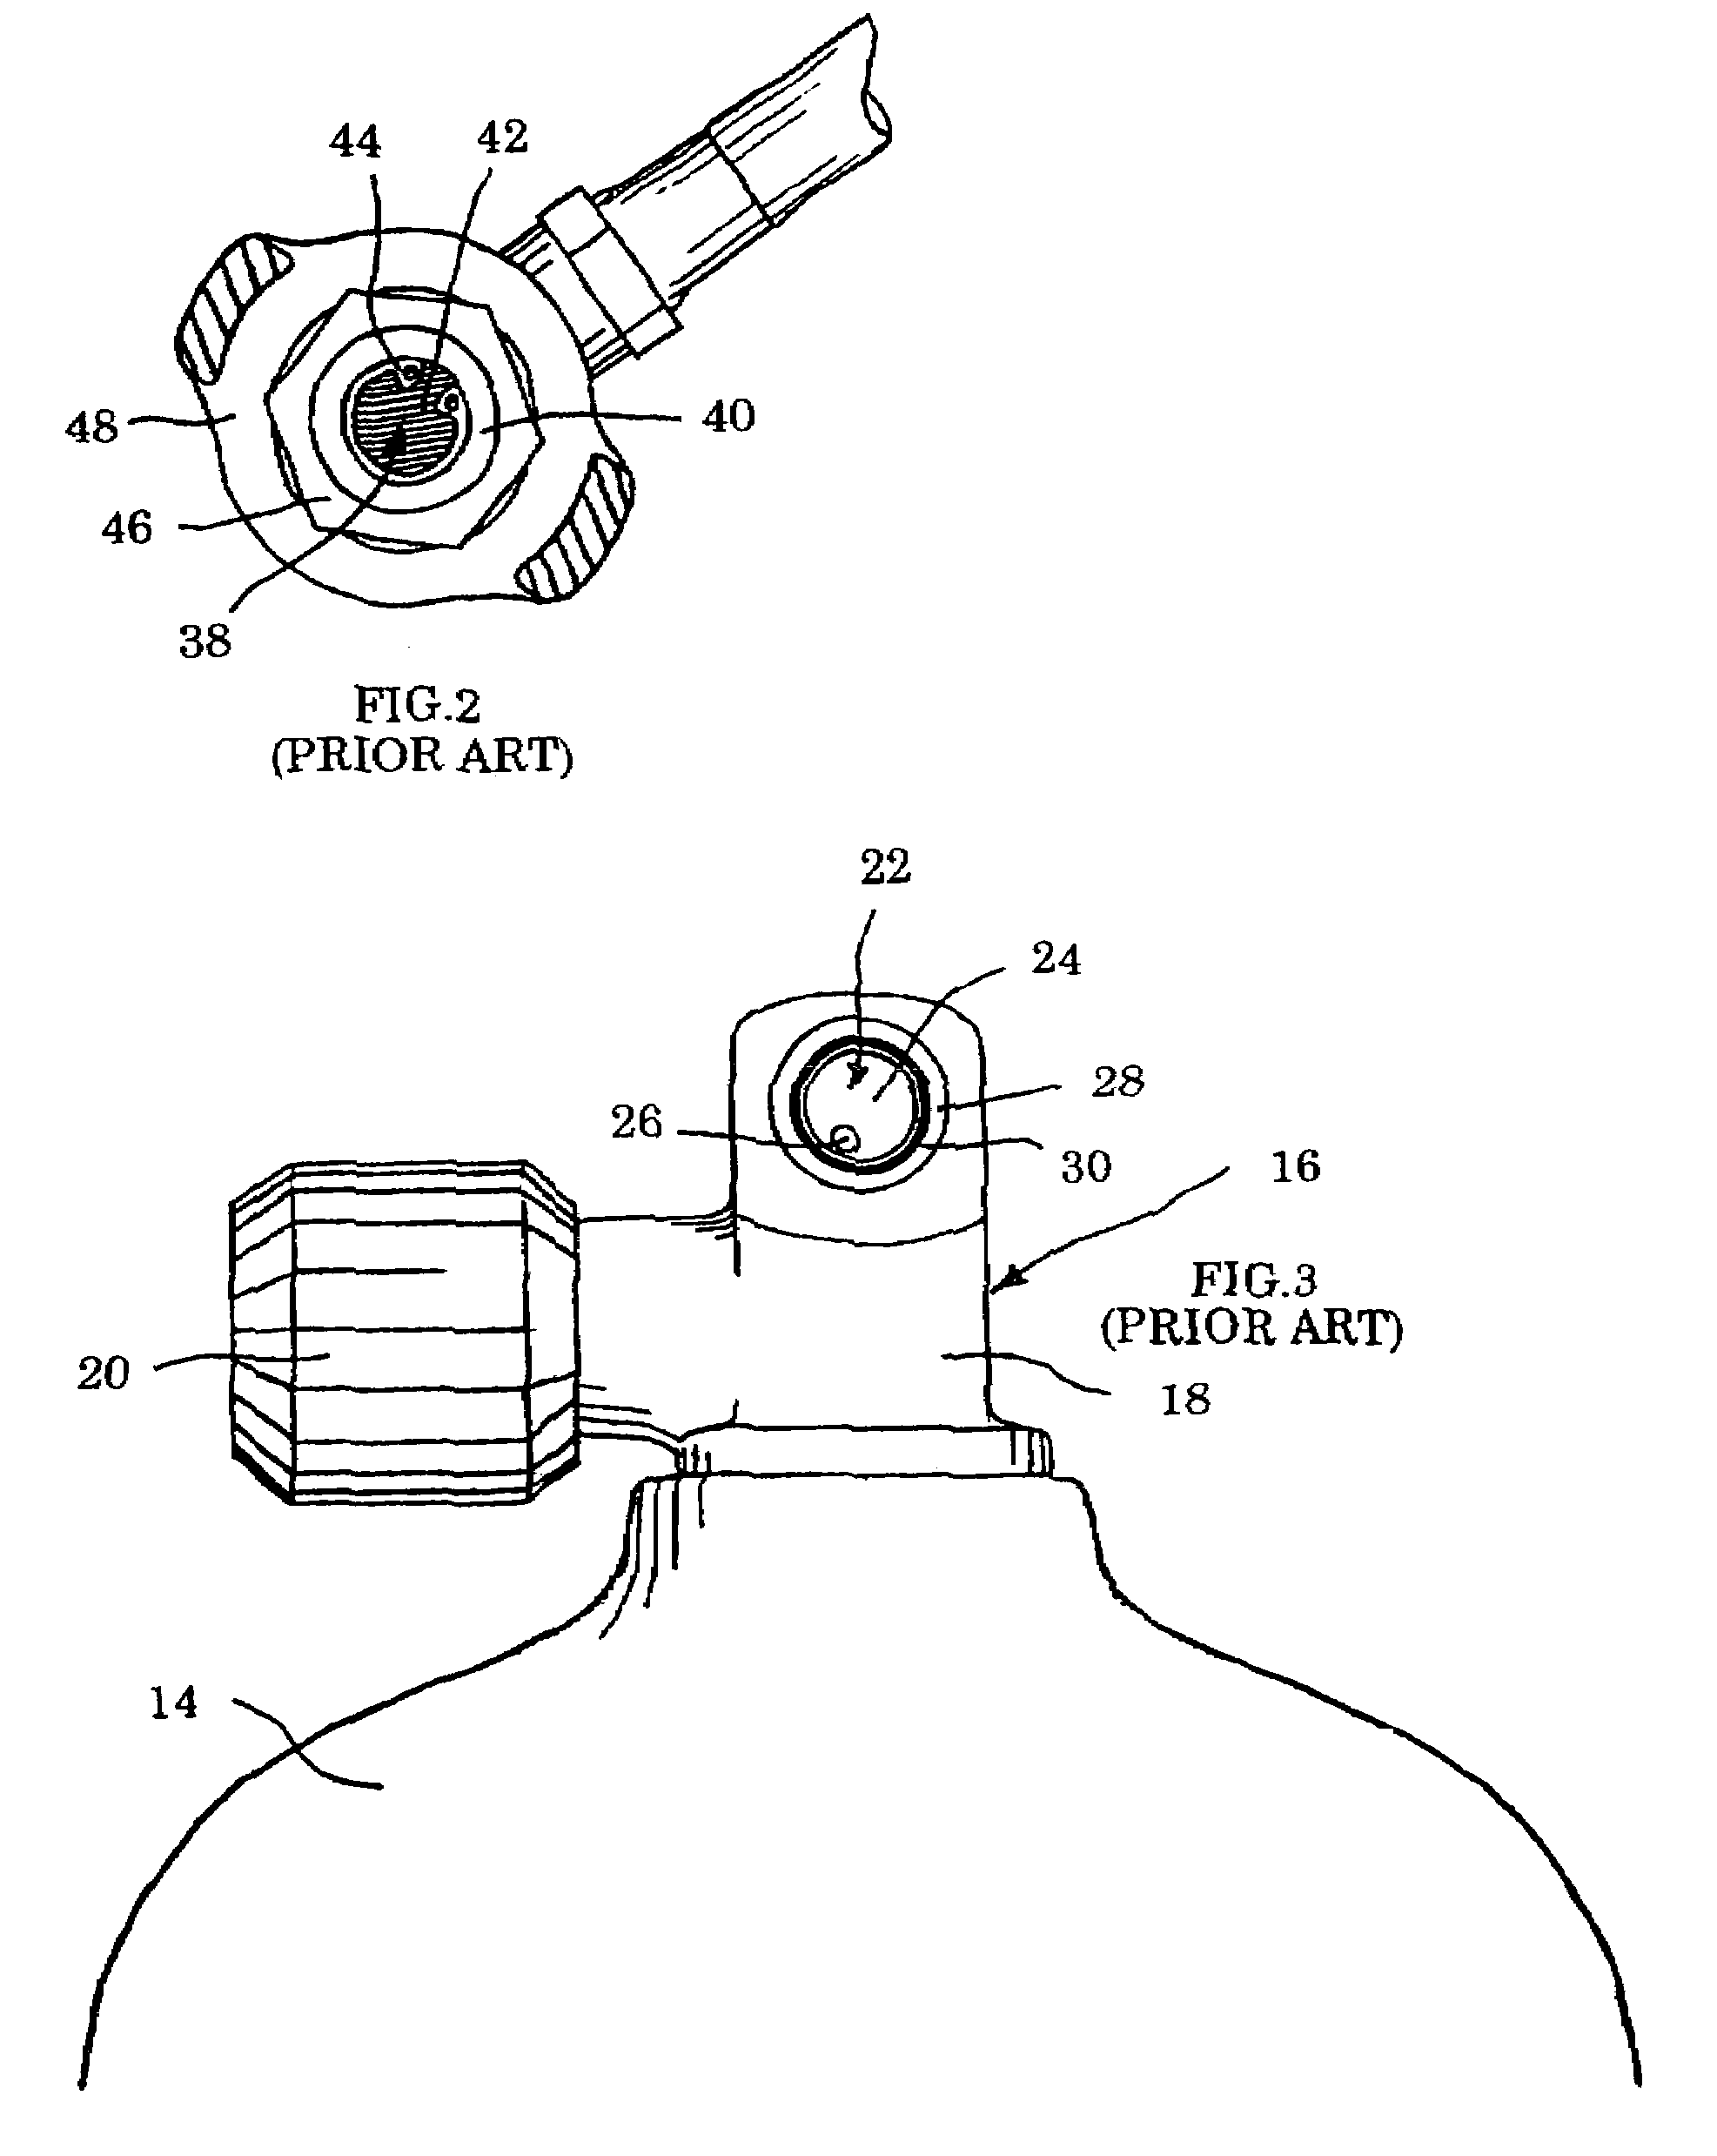 Fluid flow control valve